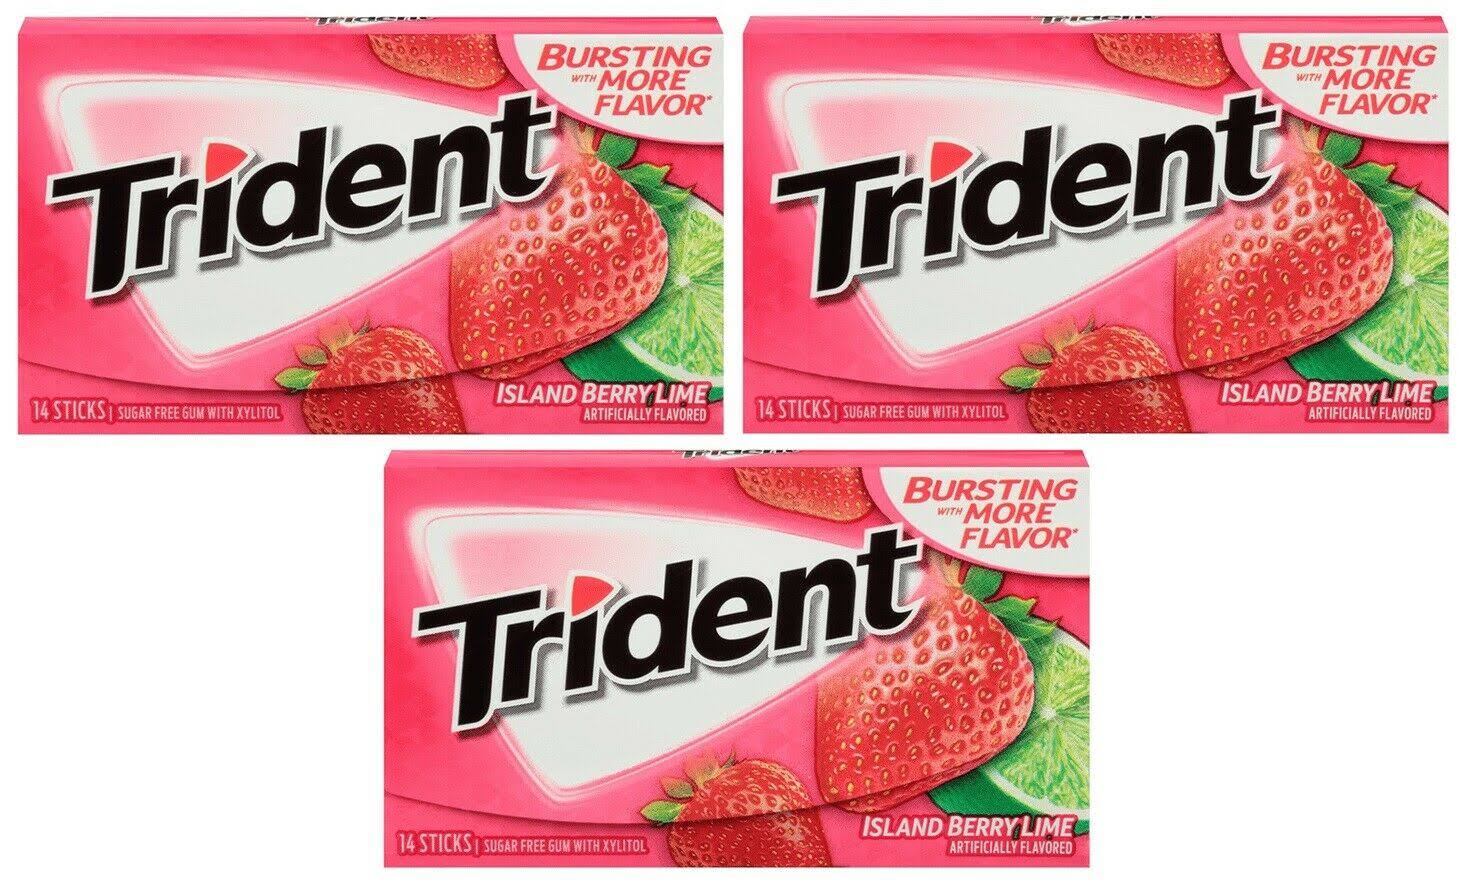 Trident Gum - Island Berry Lime, 14 Sticks